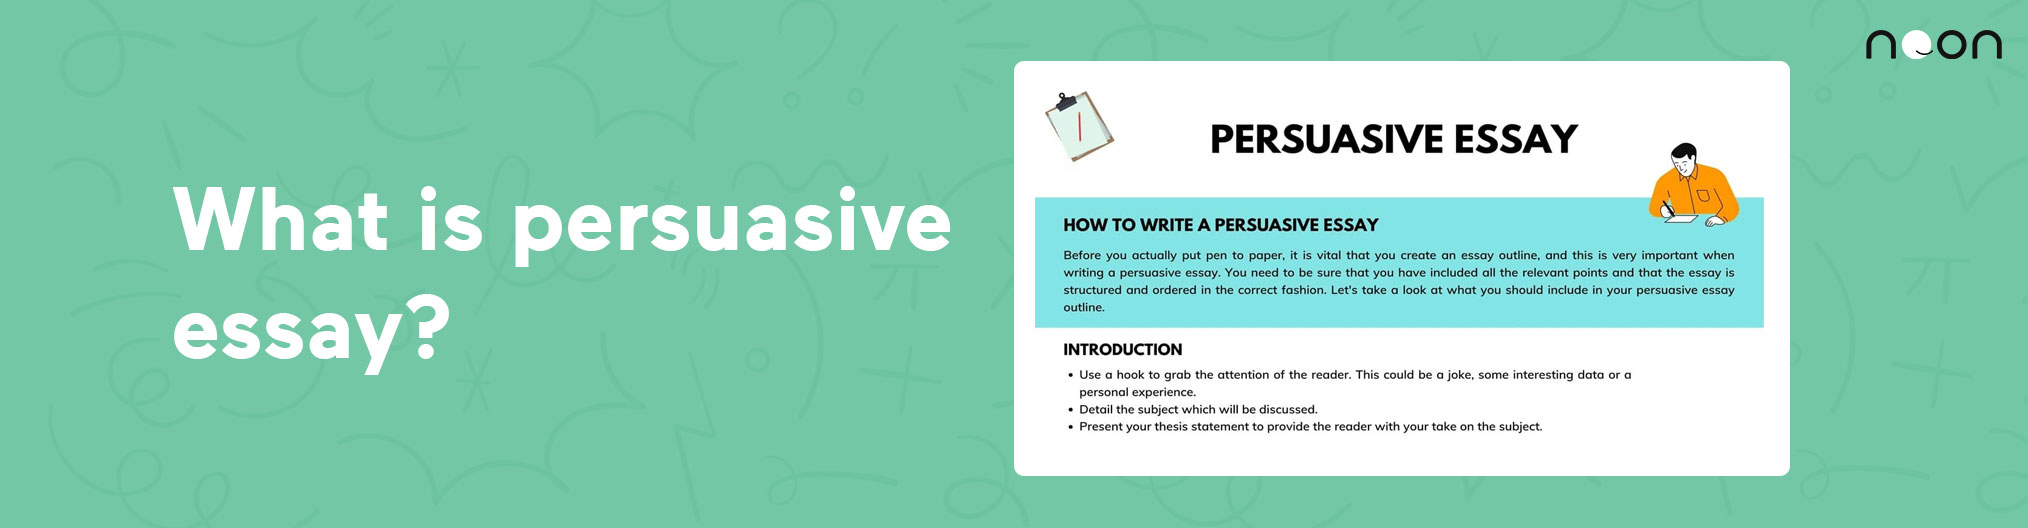 What is persuasive essay